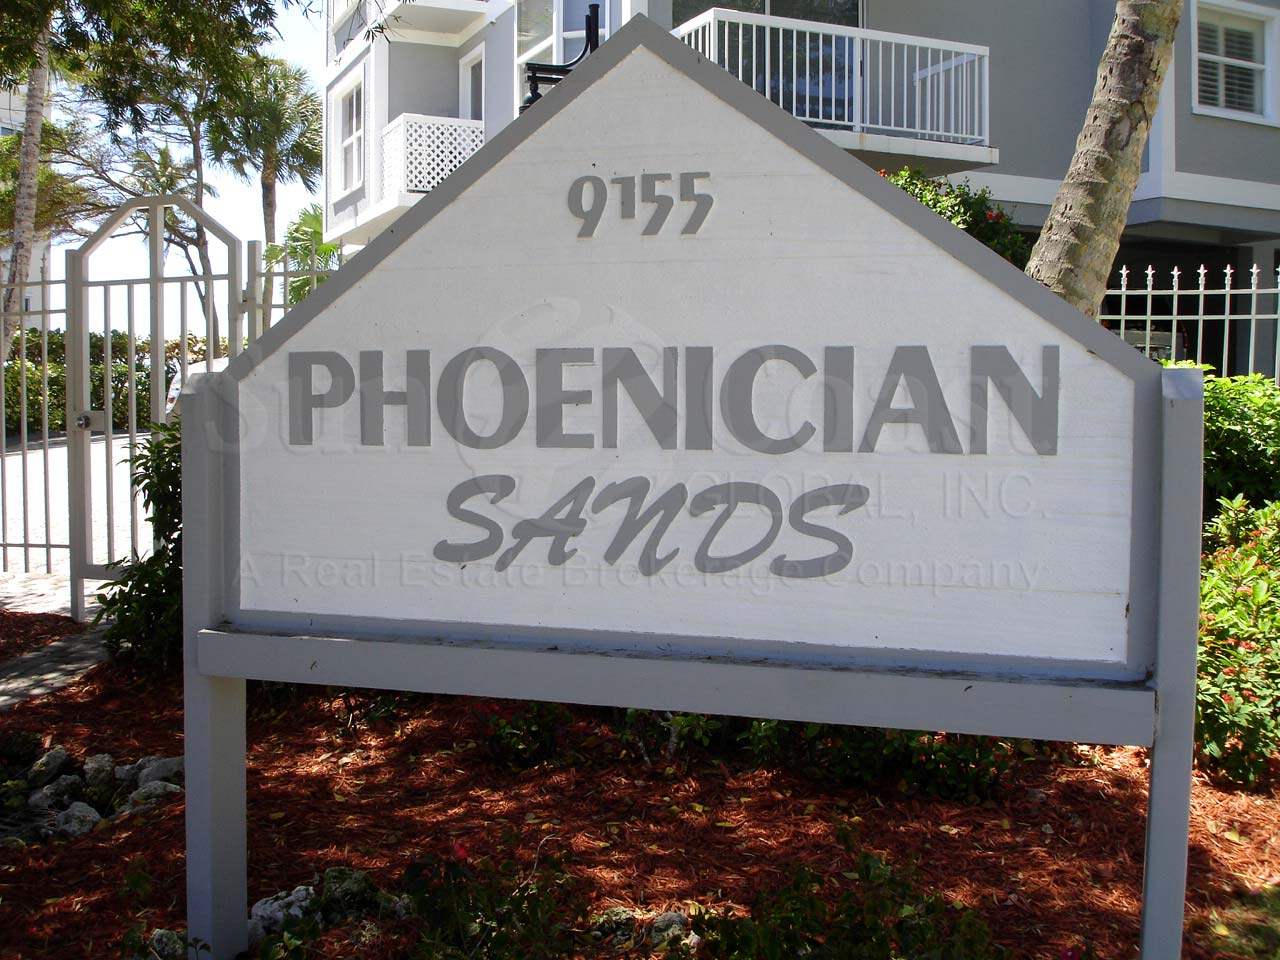 Phoenician Sands Signage